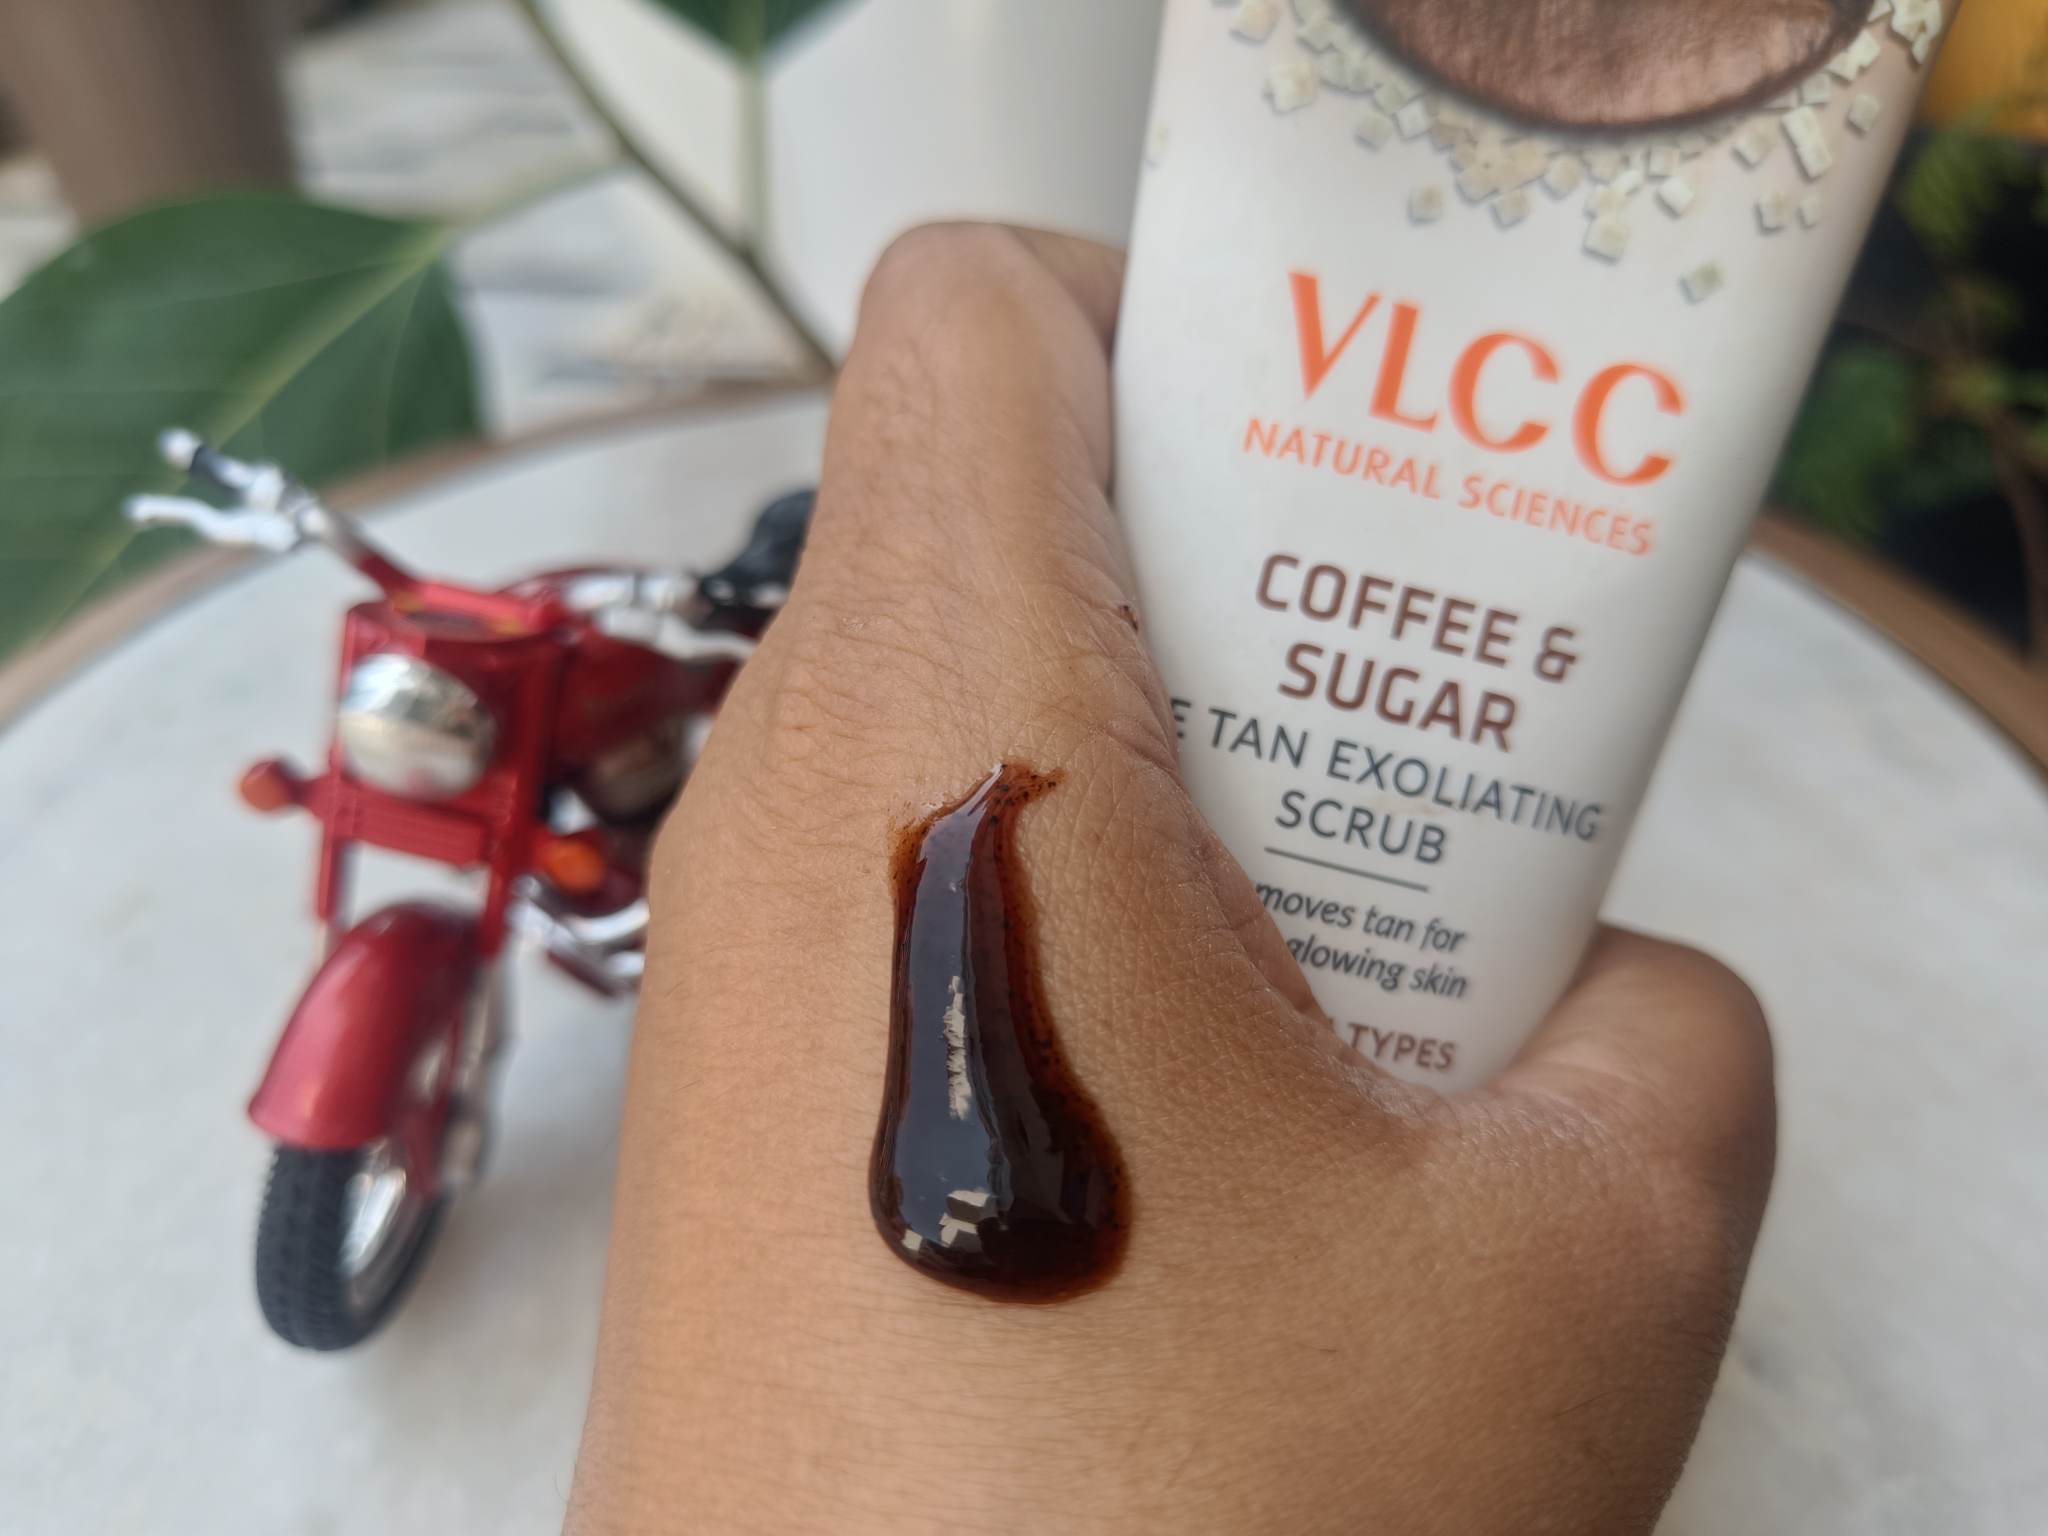 VLCC Coffee & Sugar De Tan Exfoliating Scrub| Review